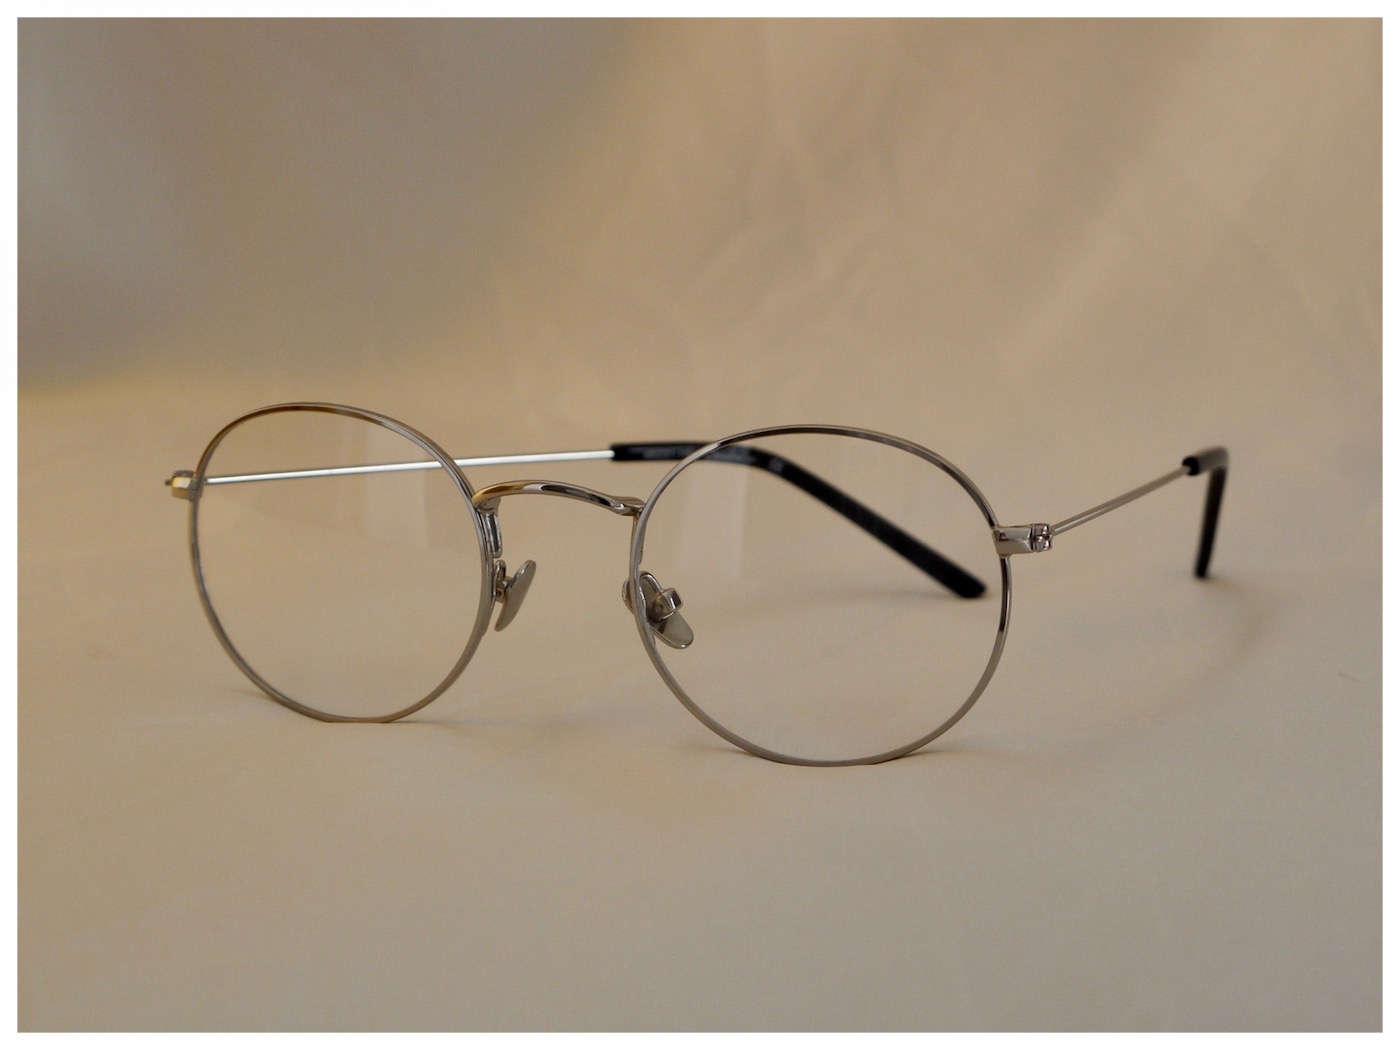 Daniel Cullen Eyewear—Frame Ref. B-376 (silver metal)